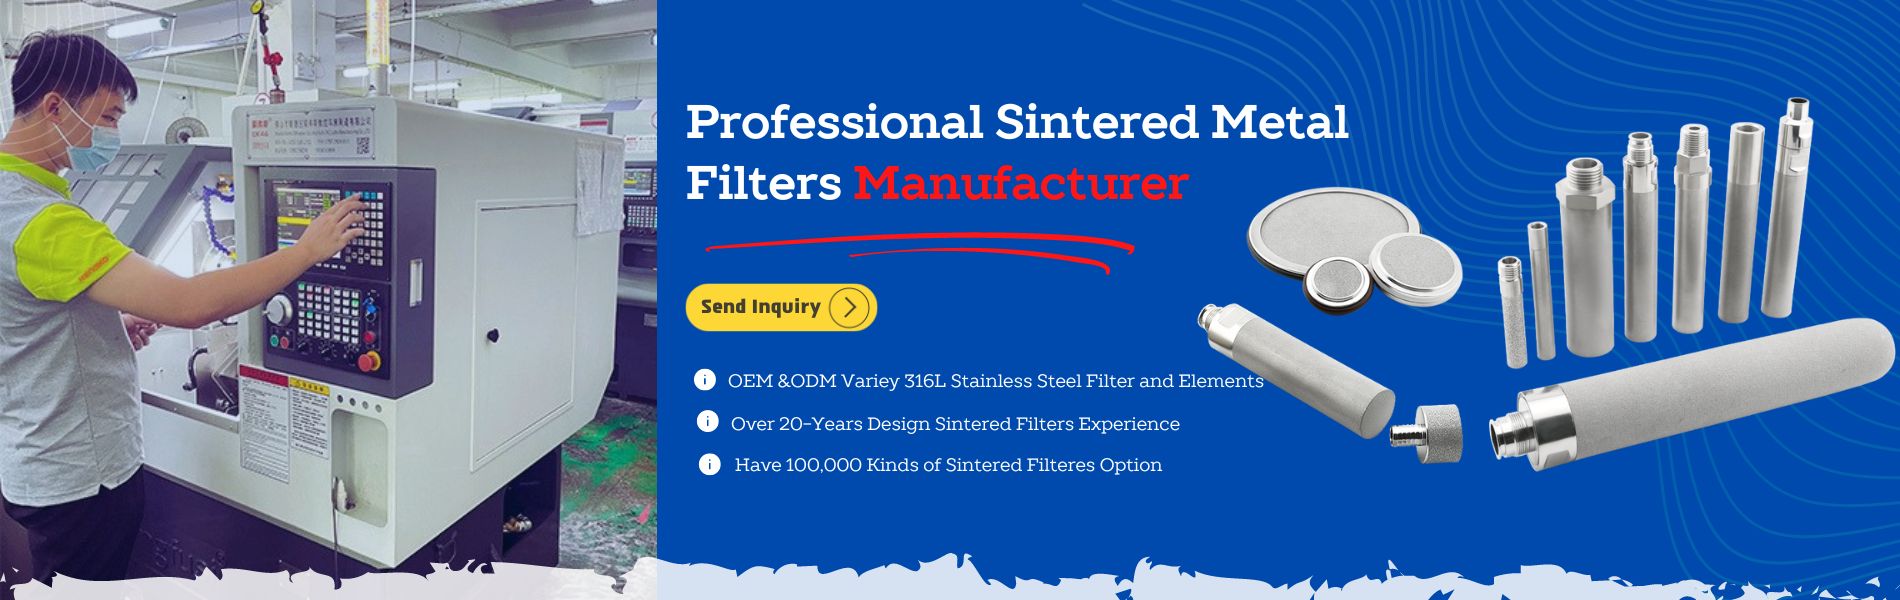 Professional Sintered Metal Filters Manufacturer